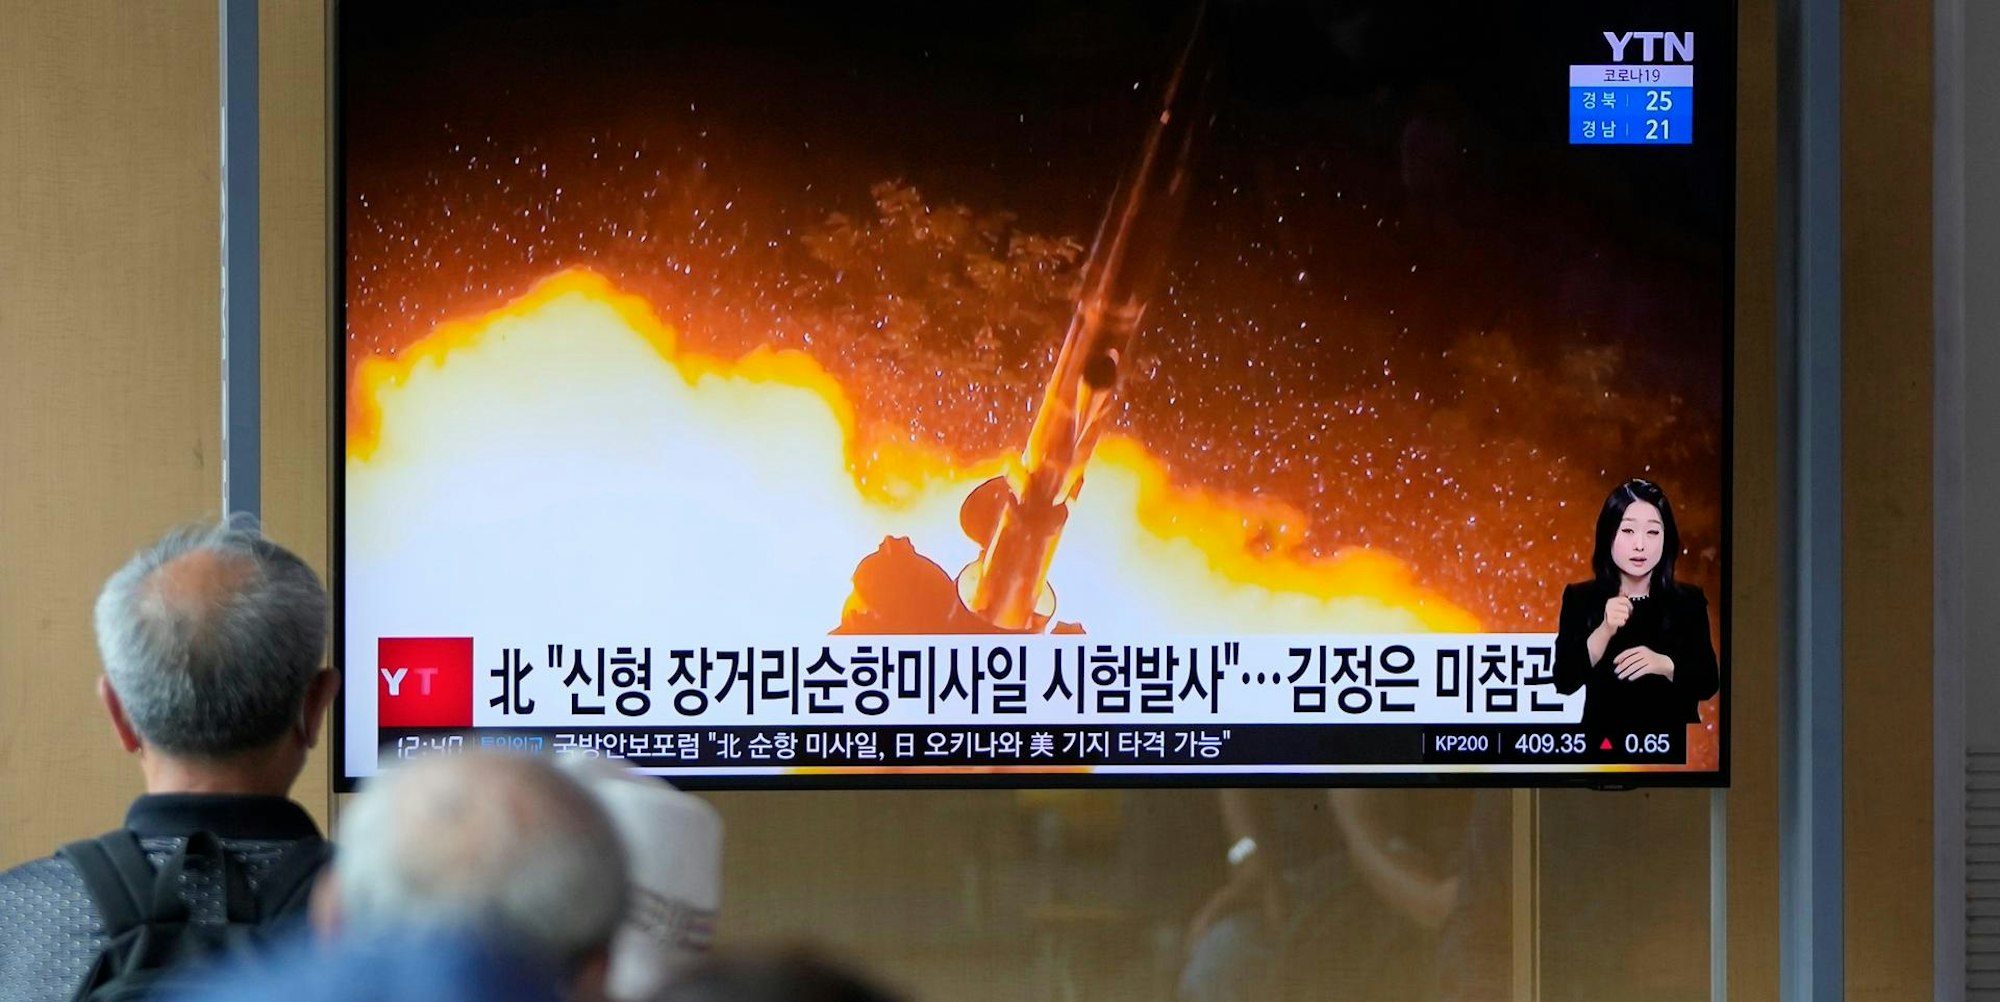 Nordkorea Test dpa